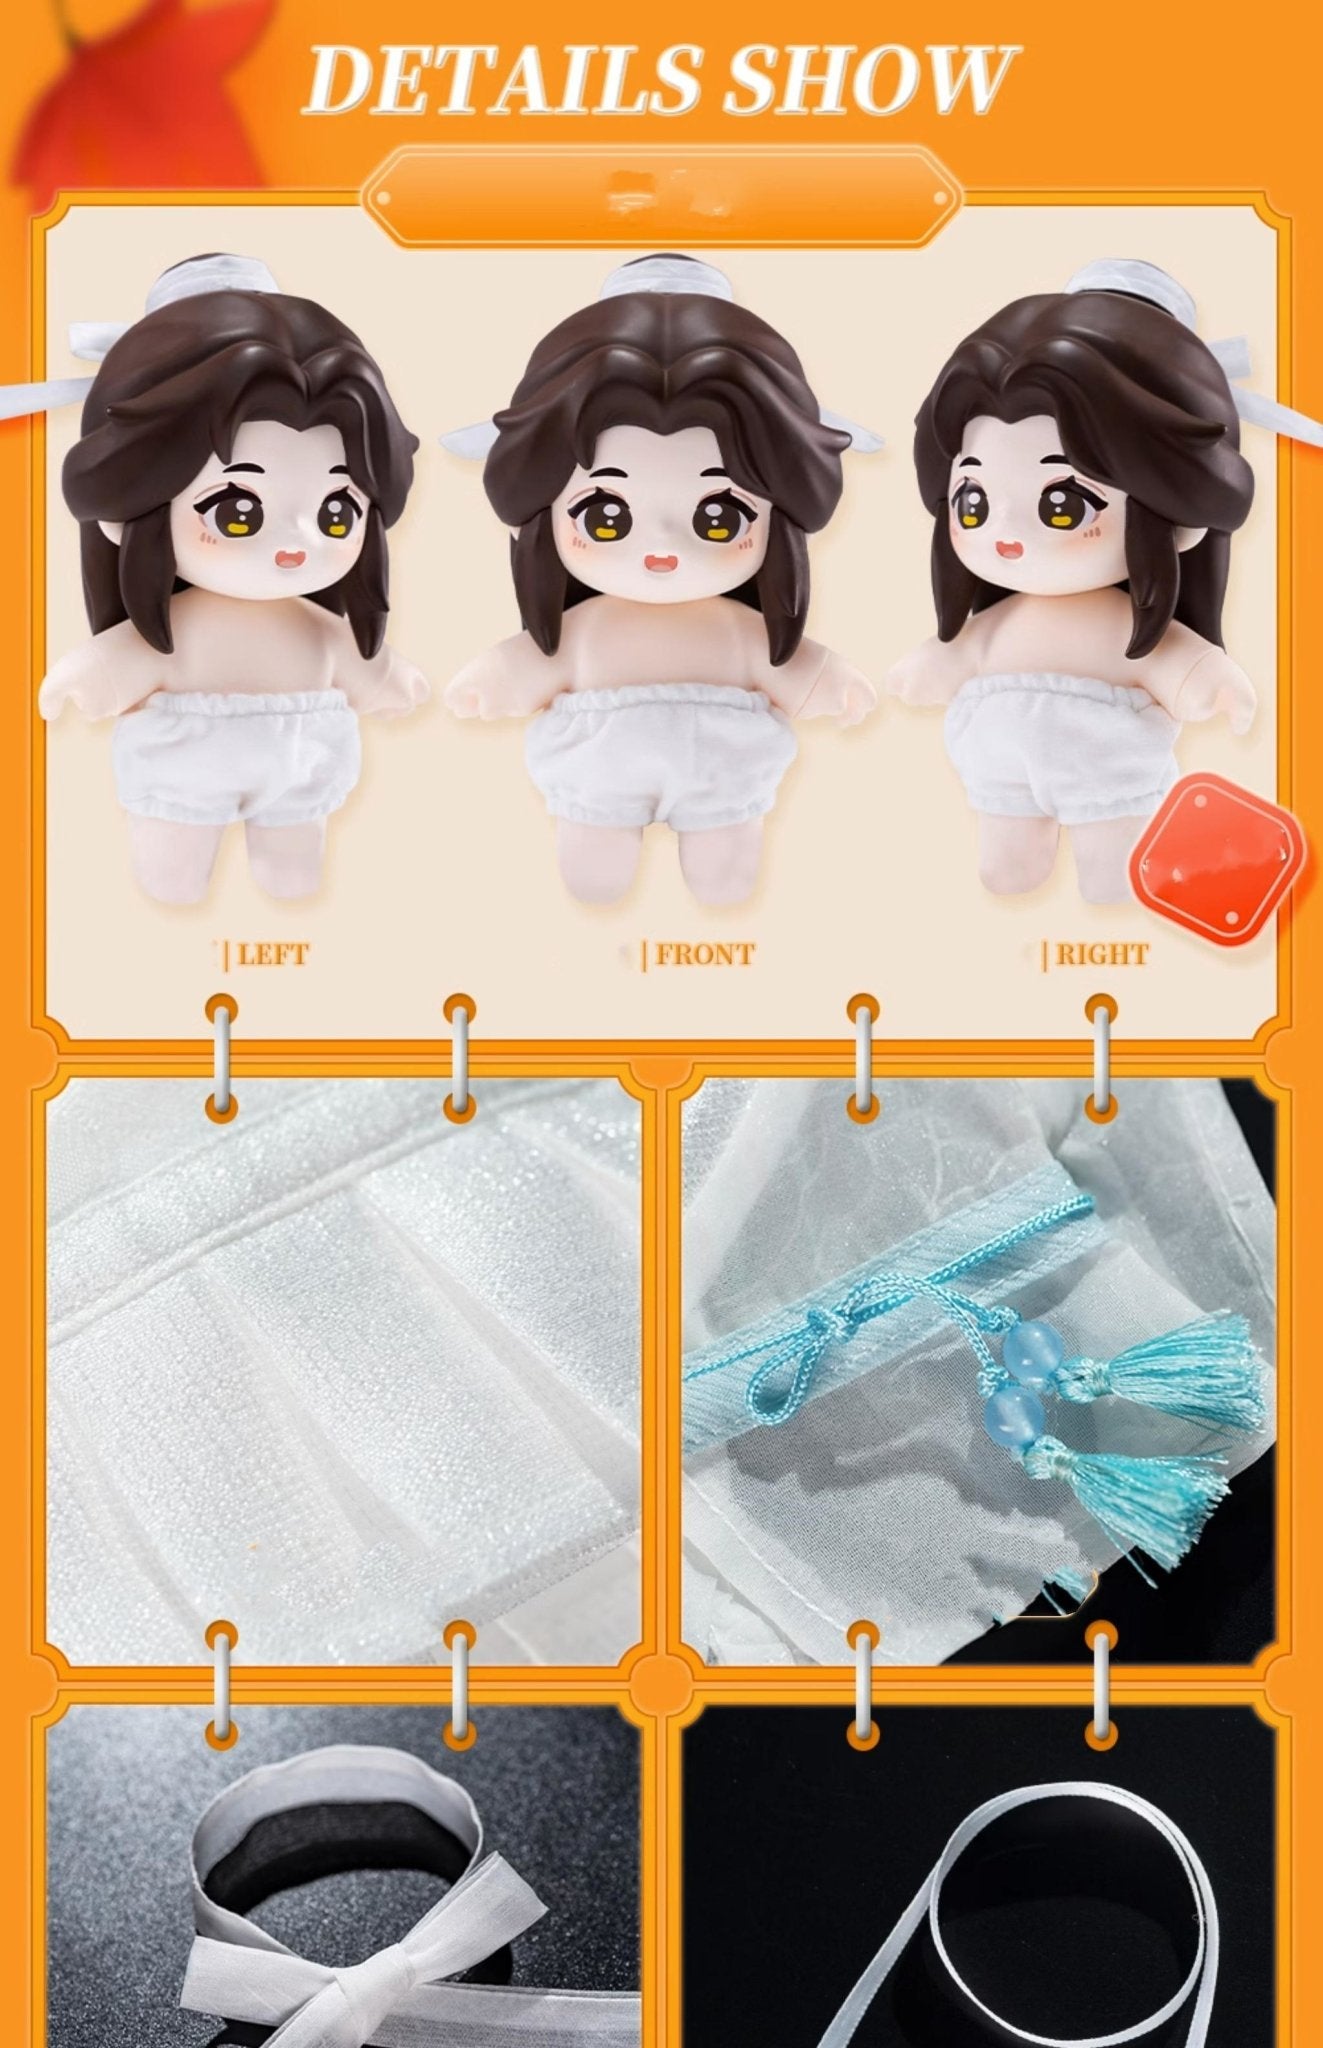 TGCF Xie Lian JOTOS15 Doll Anime Character Toy - TOY-ACC-21401 - minidoll大师 - 42shops